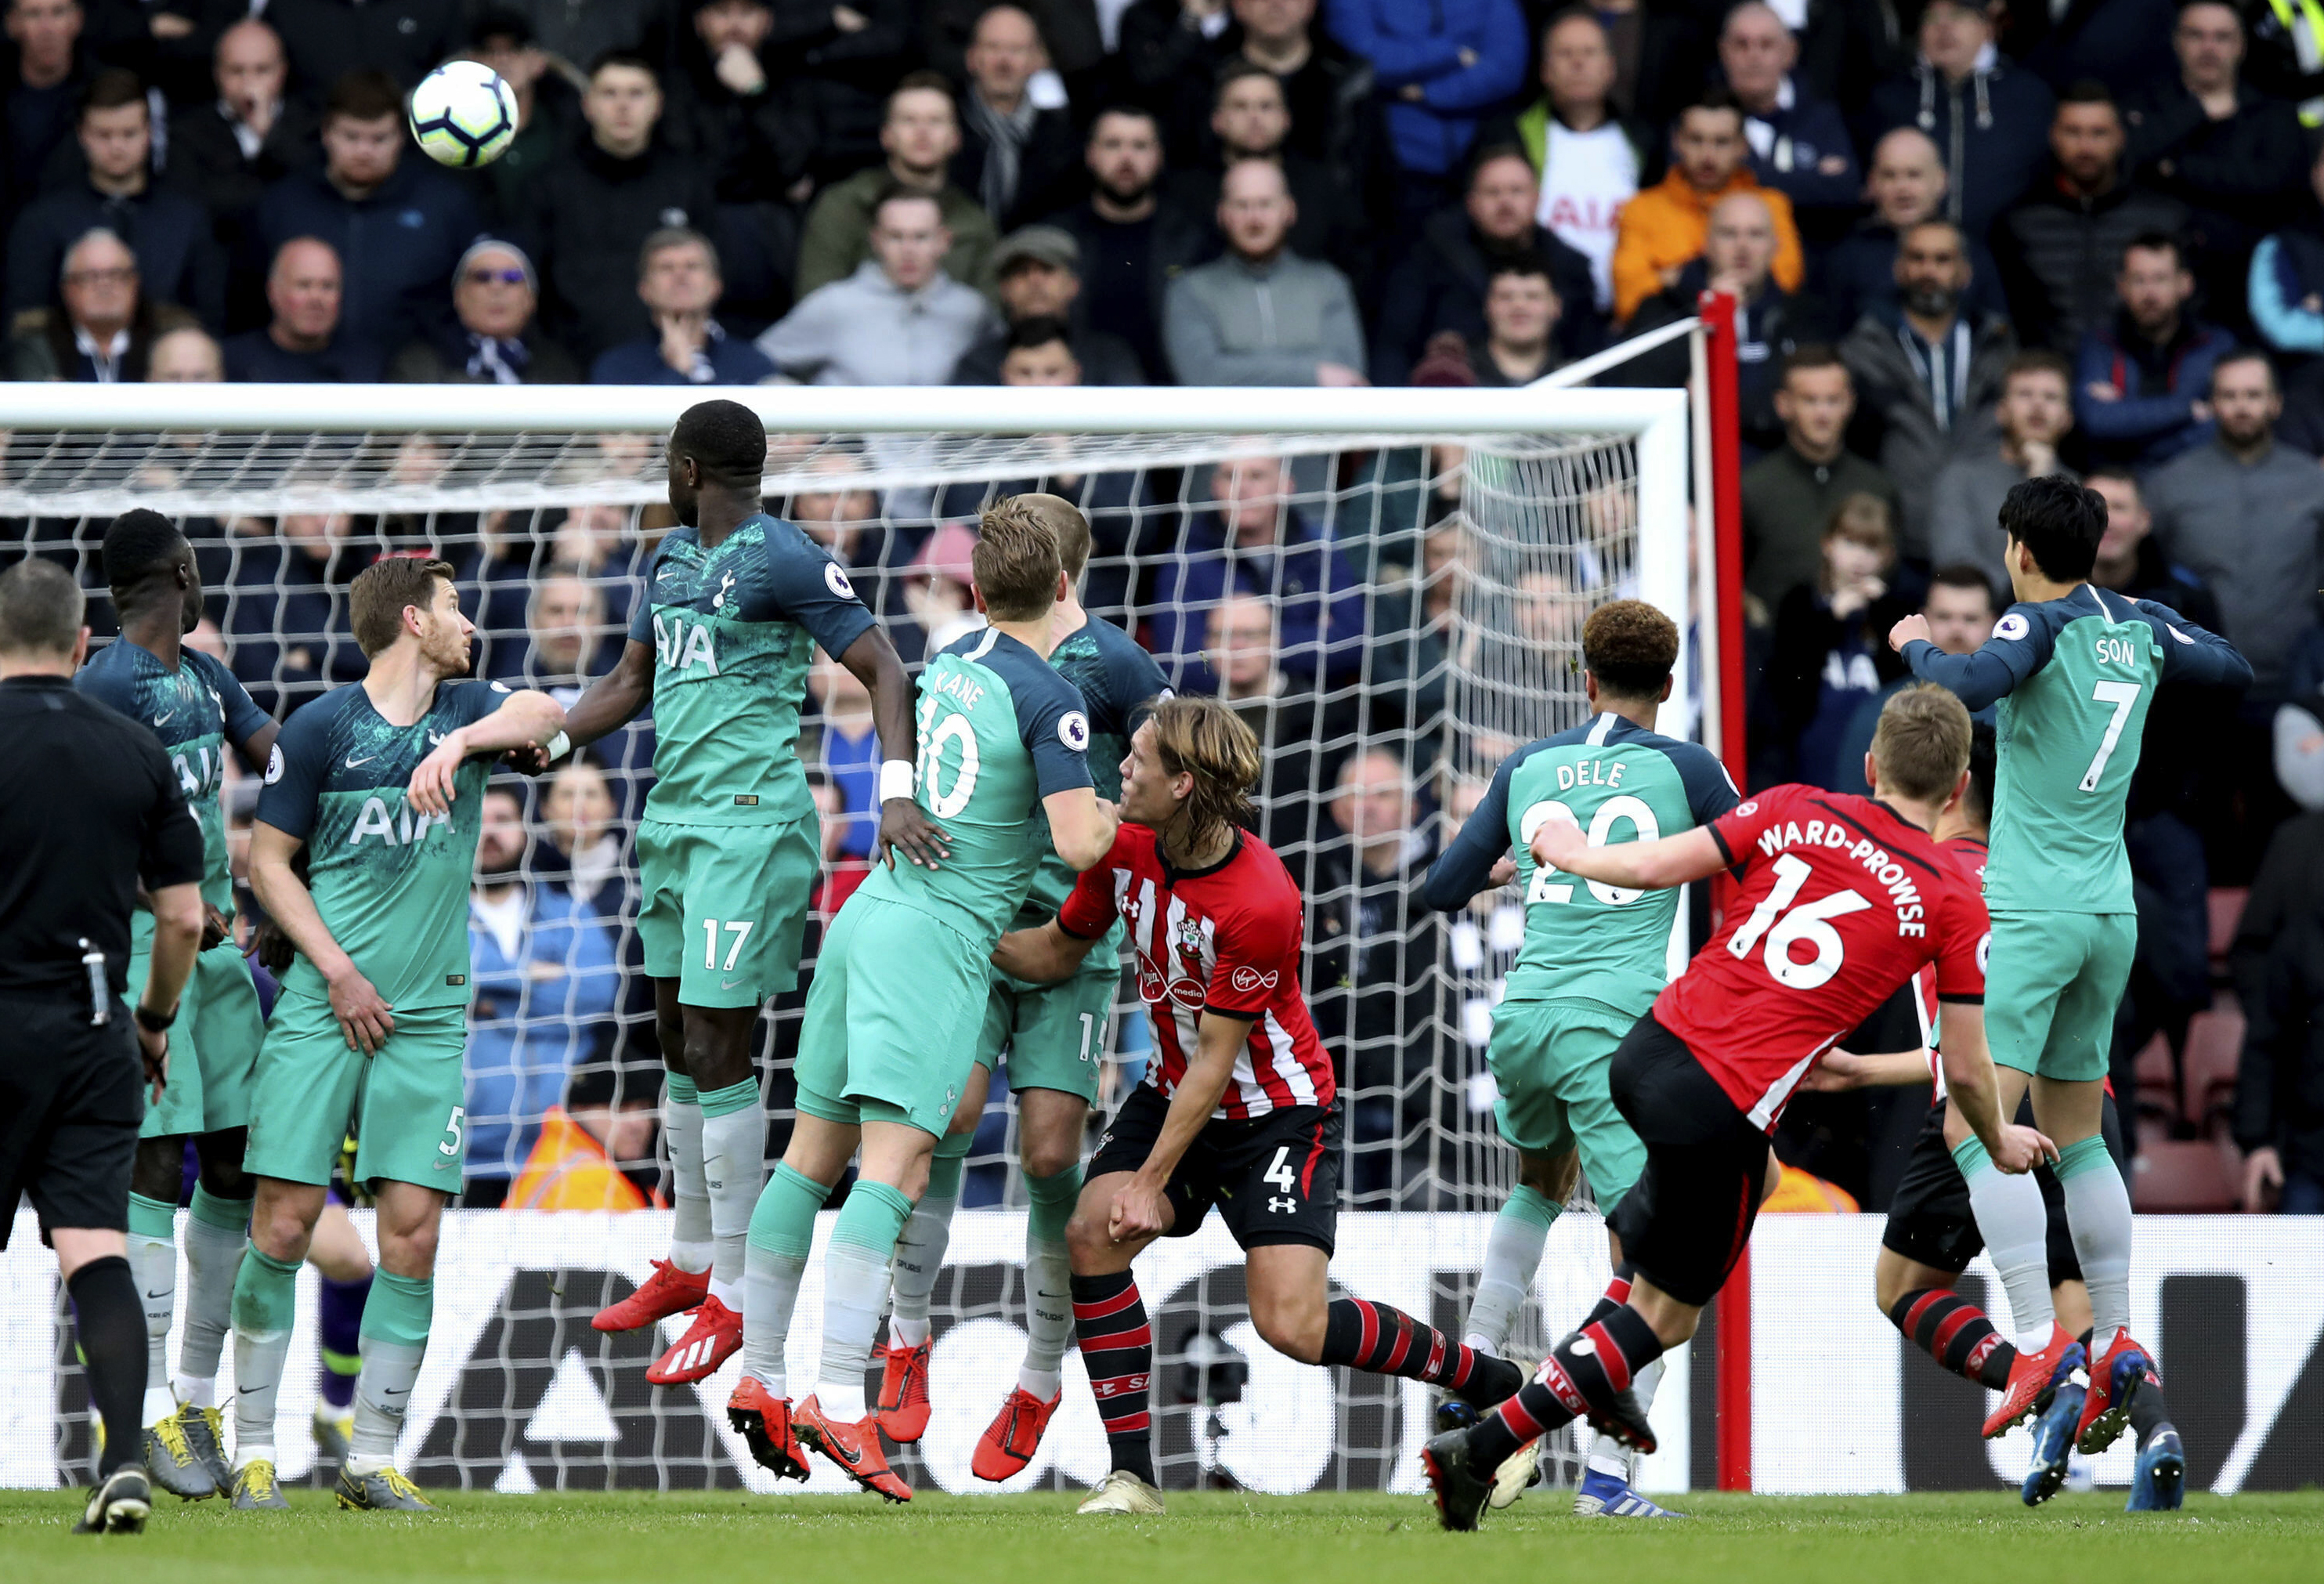 Southampton stuns Tottenham 2-1 in EPL